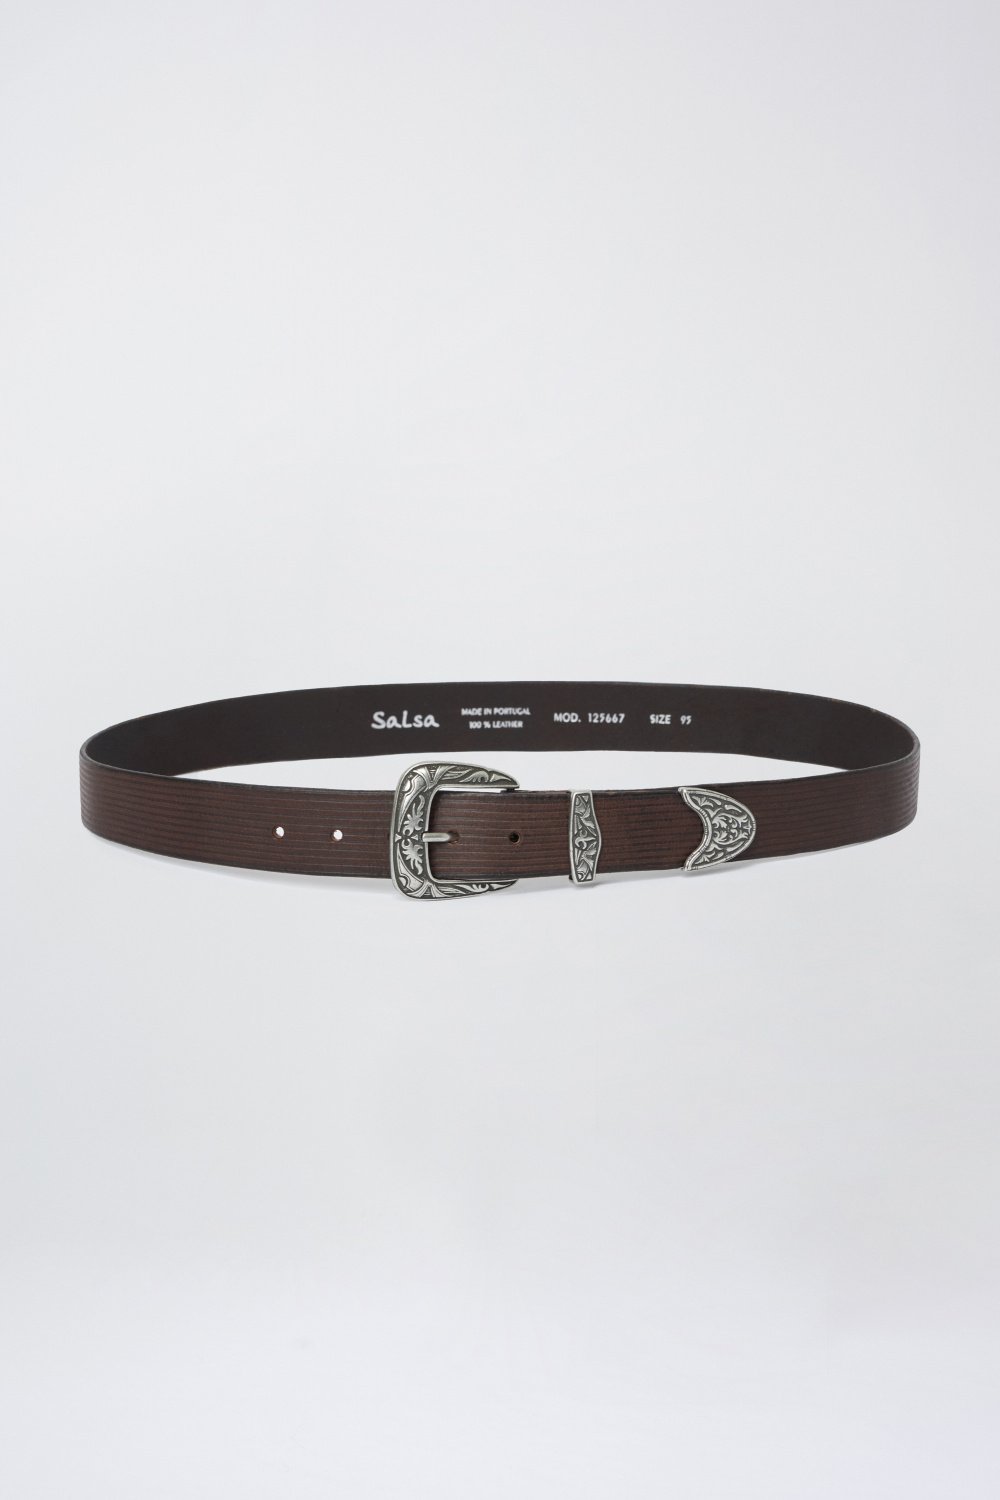 Premium cowboy style leather belt - Salsa